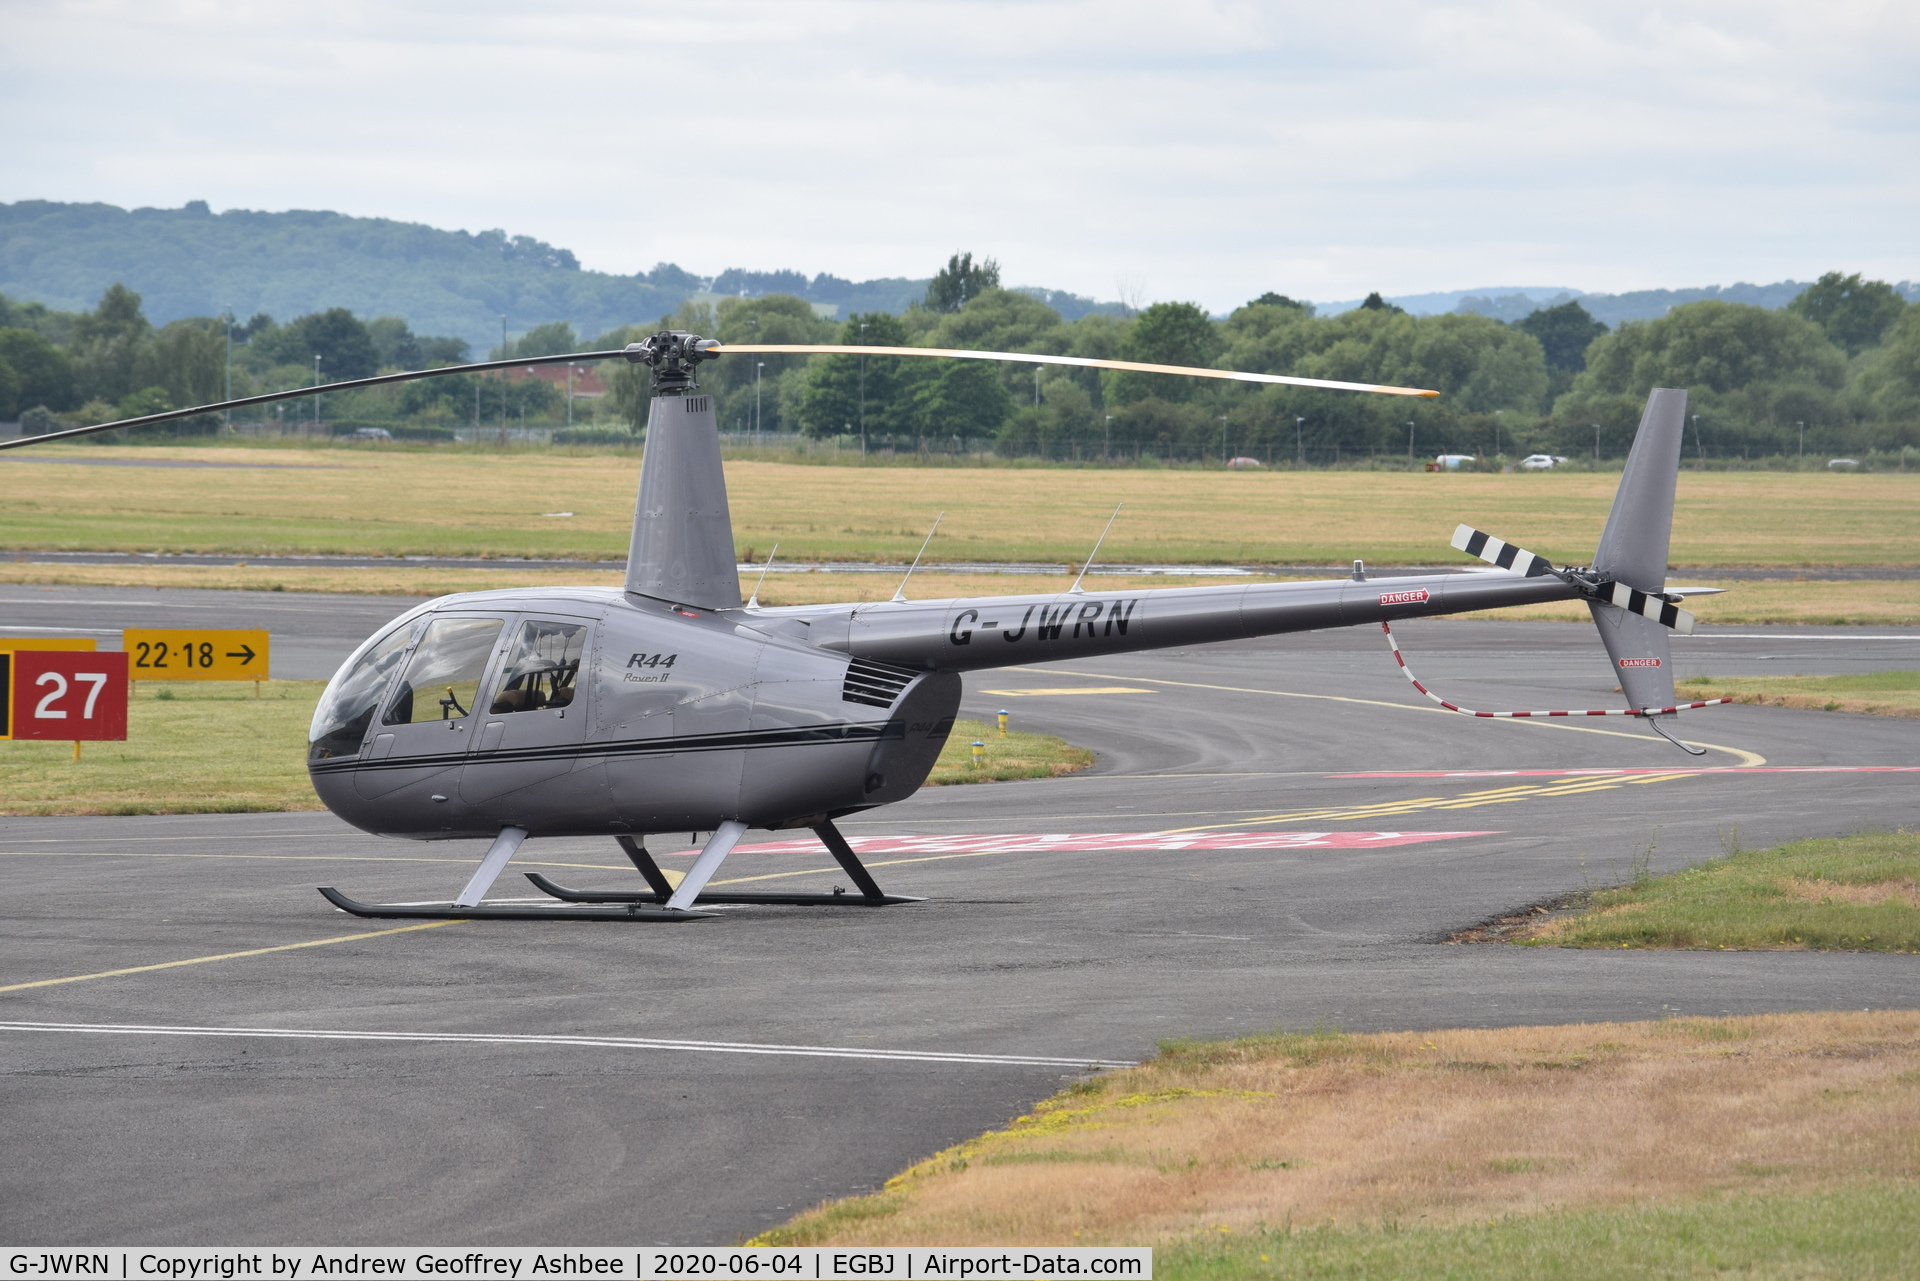 G-JWRN, 2016 Robinson R44 Raven II C/N 13857, G-JWRN at Gloucestershire Airport.